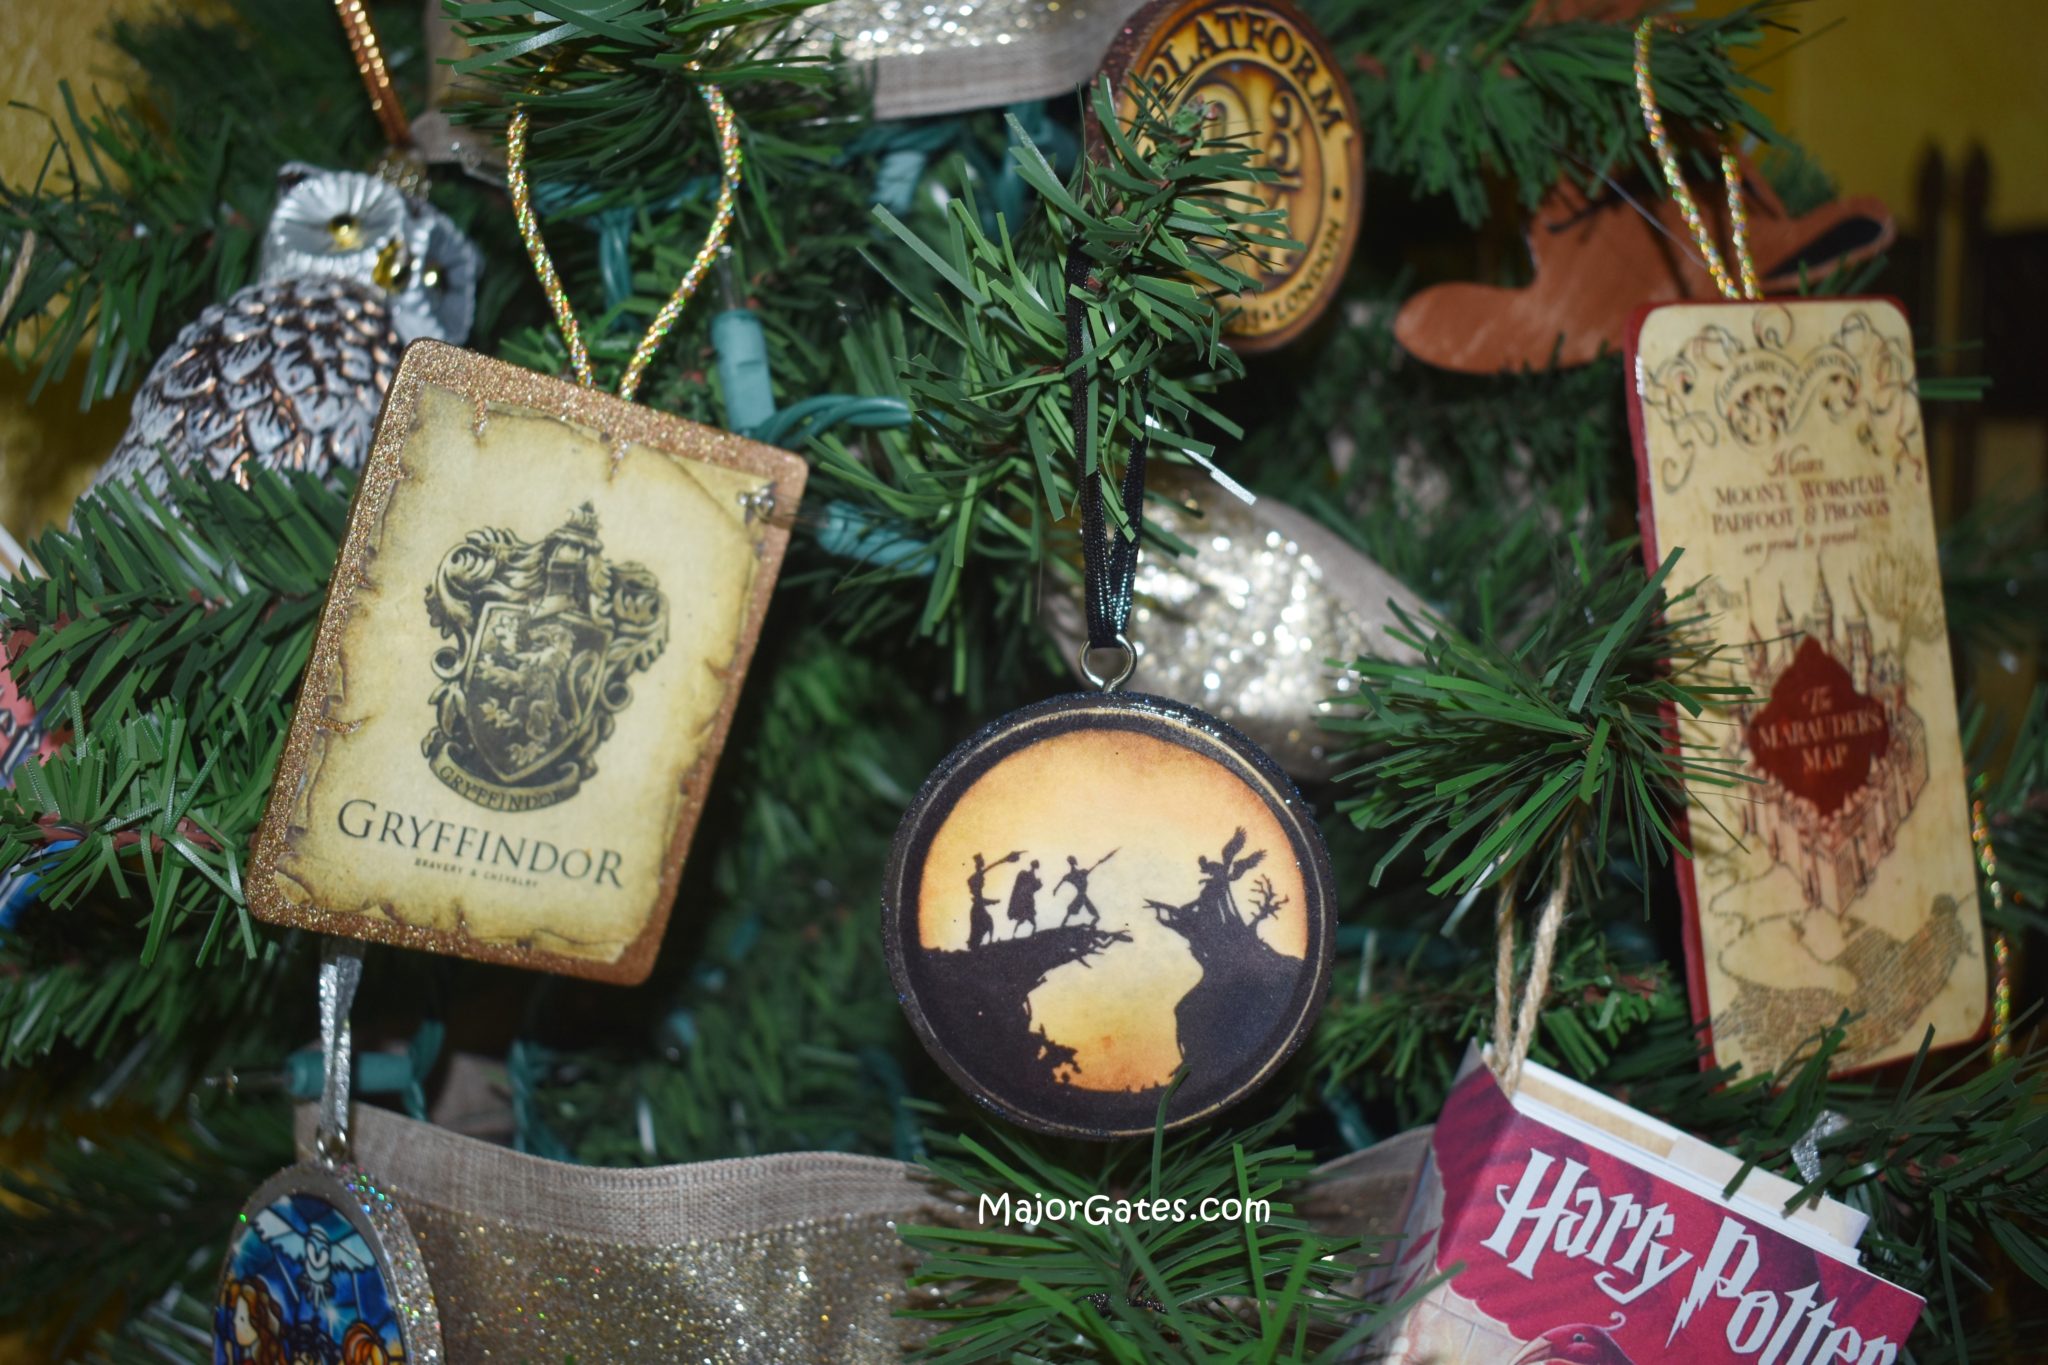 Harry Potter Ornaments